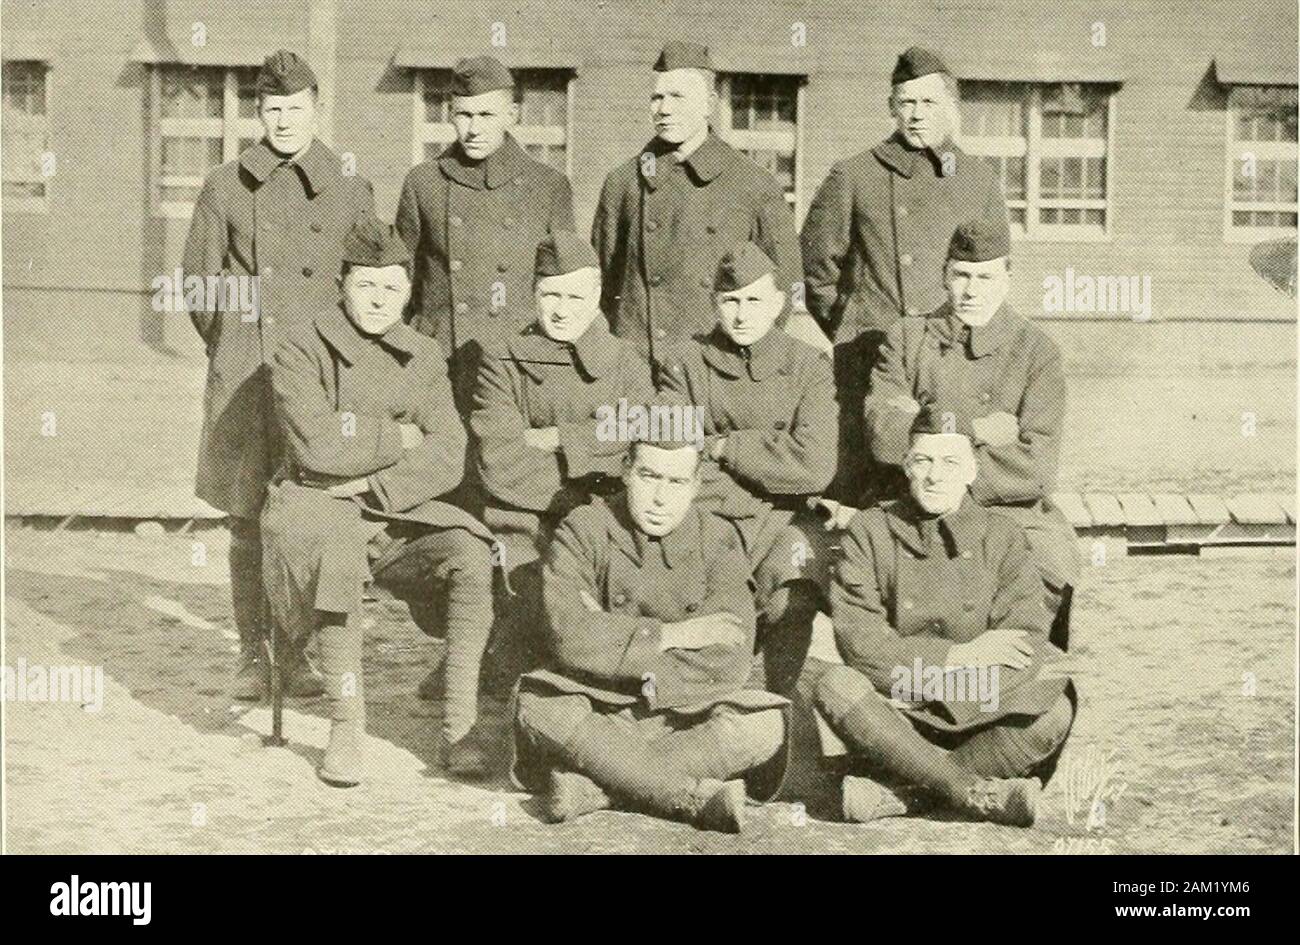 331st field artillery, United States army, 1917-1919 . EricksonA.D., Nelson J. R., Westerbo, Vaughn, Tillman, SchultzMolberg, Foster, Ross, Wenzl, Van Wonterghem Haugen, Rayner, Hart, Moldenhauer, Moran. Schuetz, Slama, Fowell, StevensonSchilter, Lenz, Lindner, Johnson G. T.Sgt. Laemle, Sgt. Grange 2 8 2 — BATTERY E  551!? Field Artillery,y History OX the 29th of August, 1917. Capt. Charles B. Stuart and Lieuts. W. M.Allen, F. C. Foltz, C. D. Whitney and F. H. Pincoffs reported during a duststorm for duty with the 331st Field Artillery which was organized the sameday under Col. William McK. L Stock Photo